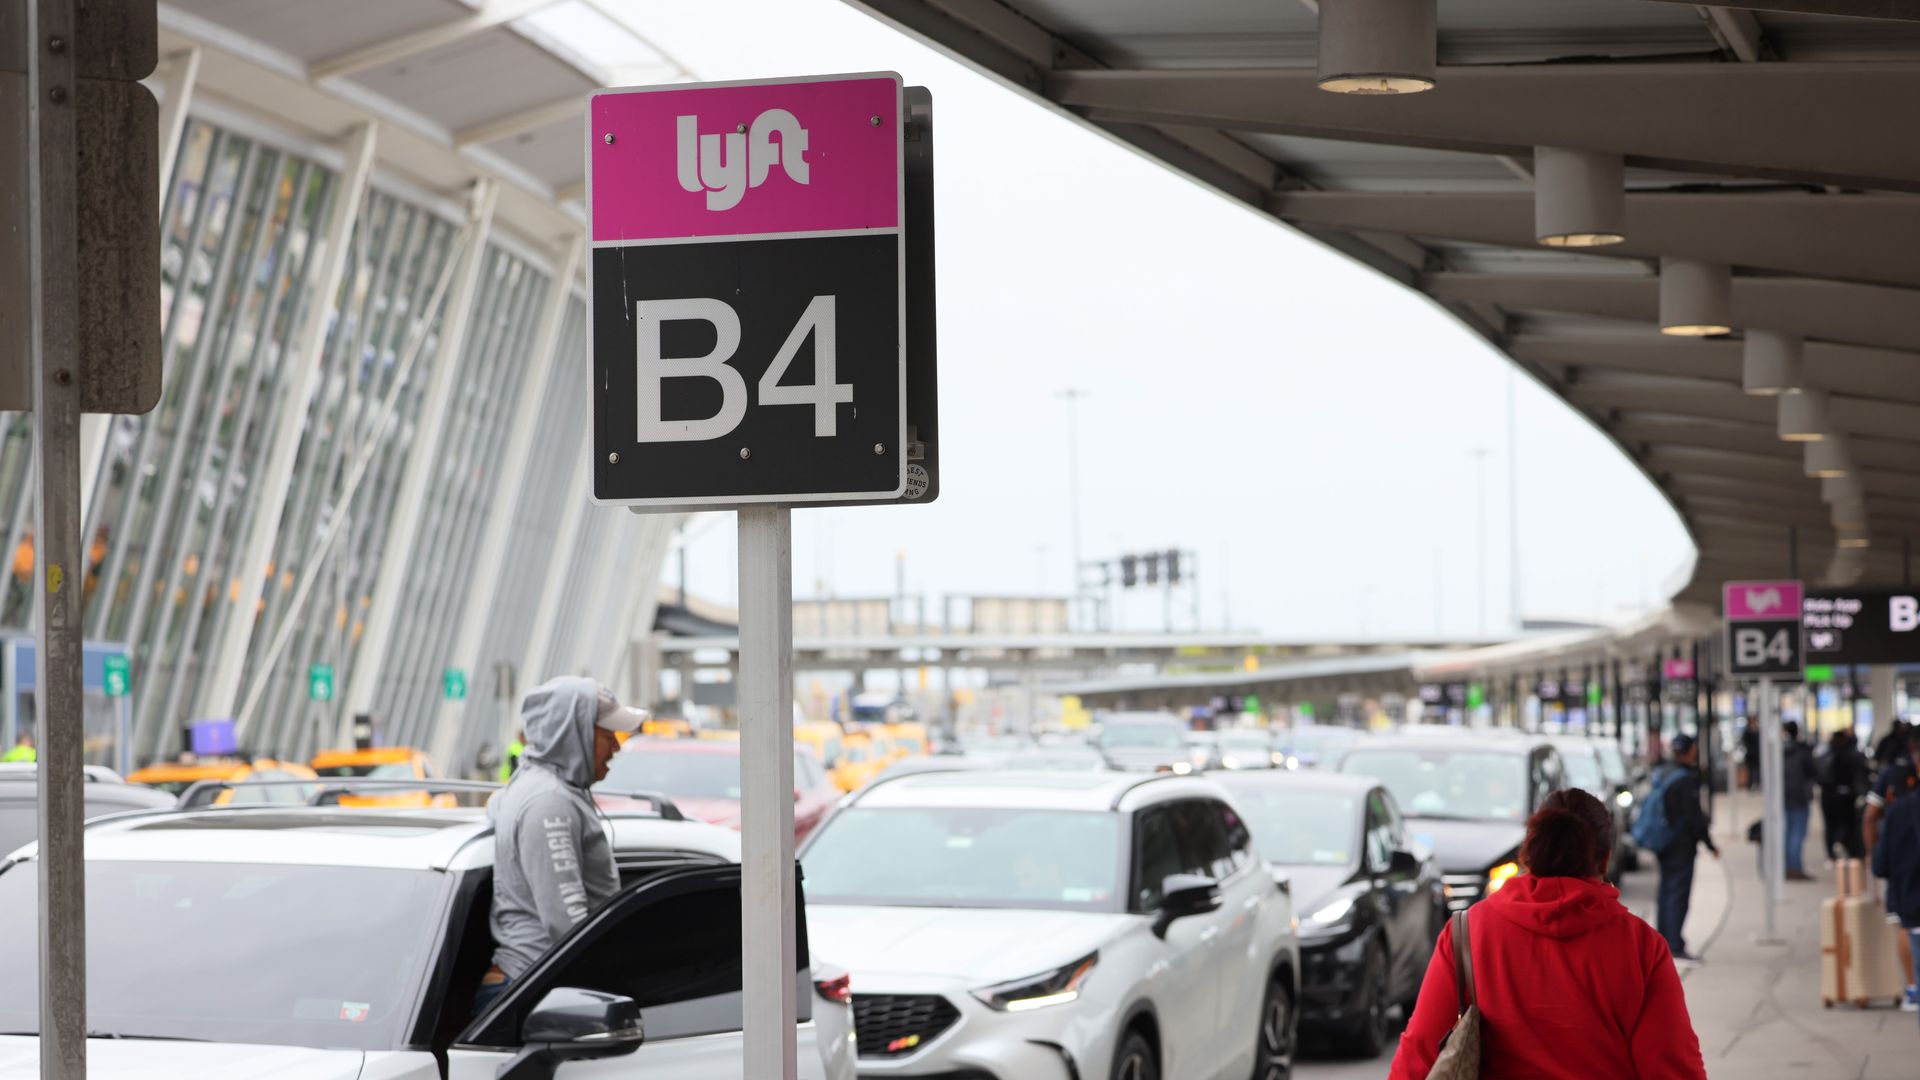 A Lyft sign at an airport arrivals curb